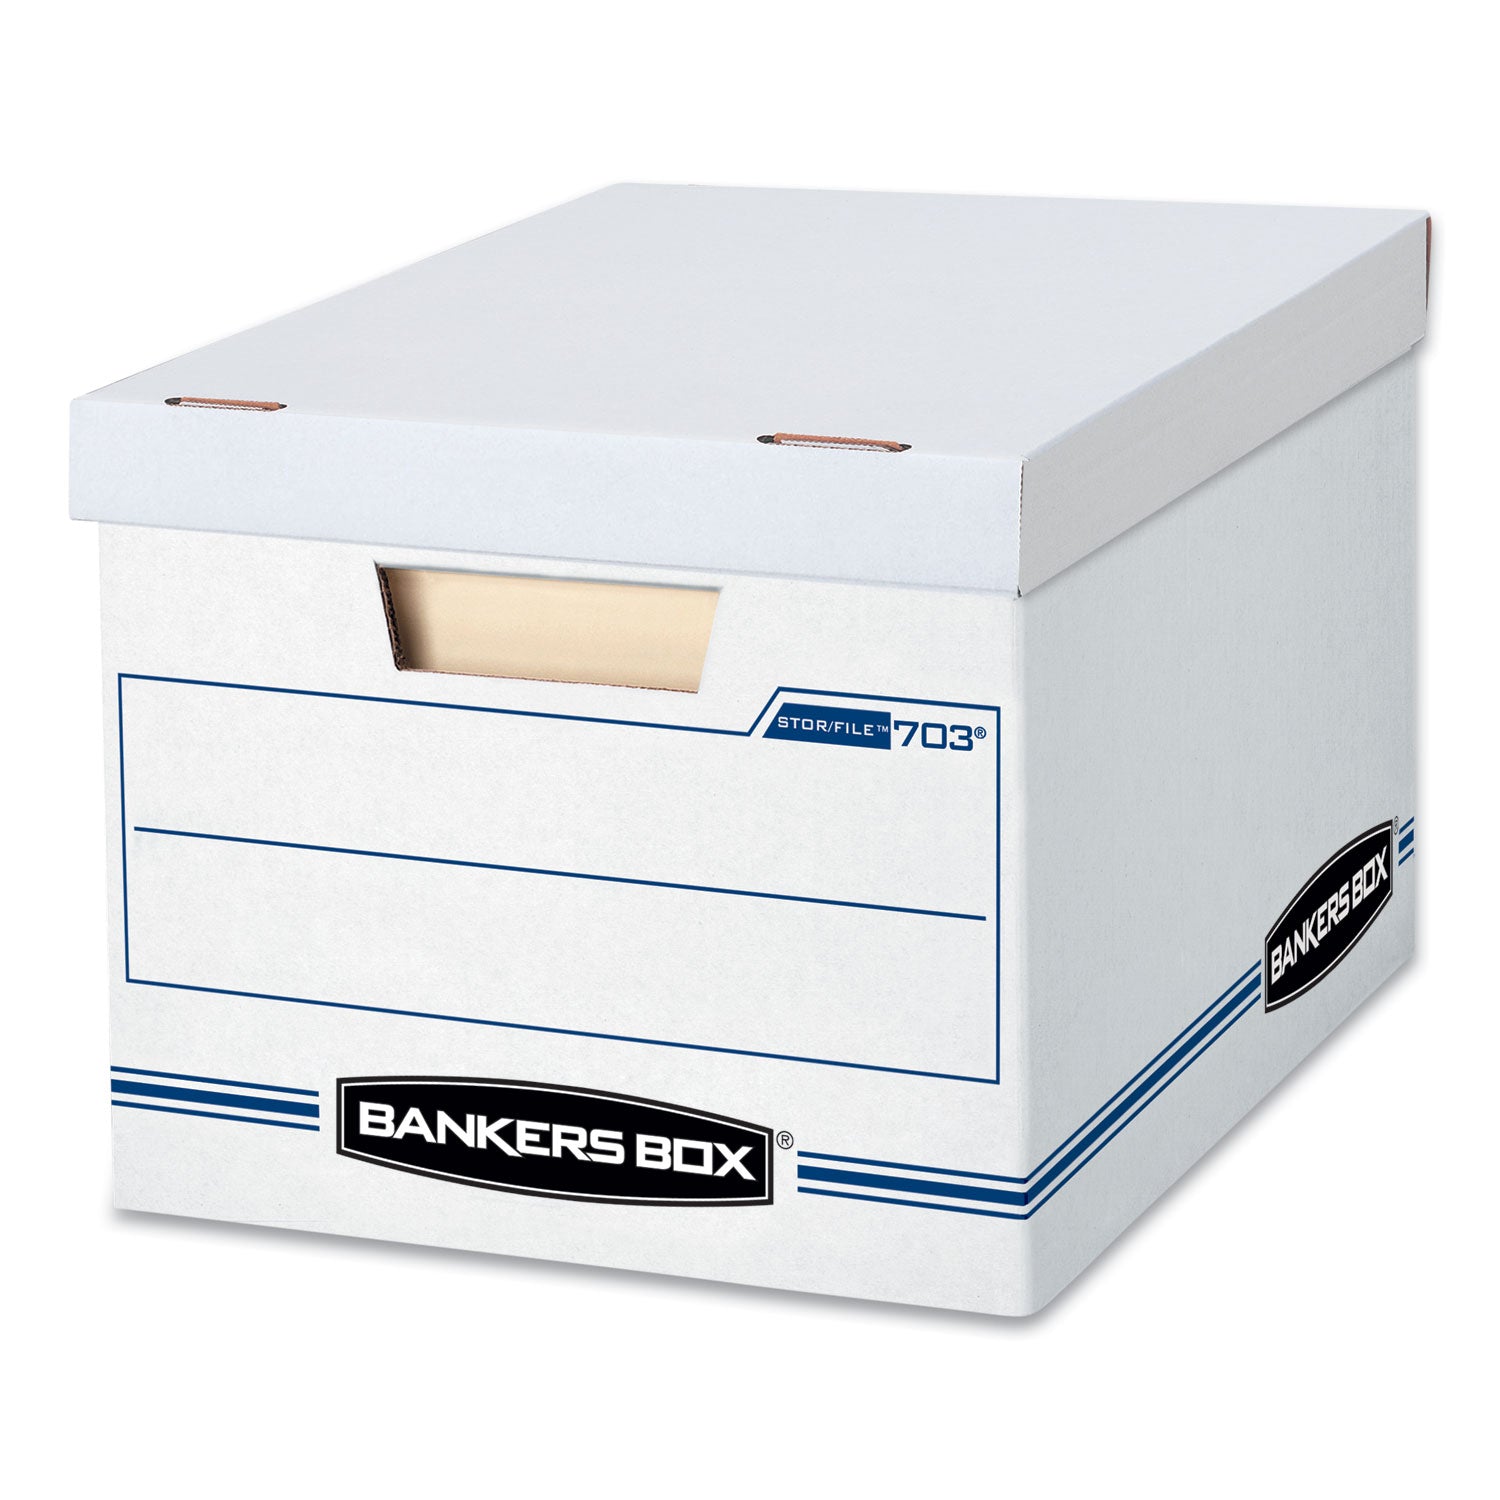 STOR/FILE Basic-Duty Storage Boxes, Letter/Legal Files, 12.5" x 16.25" x 10.5", White/Blue, 4/Carton - 